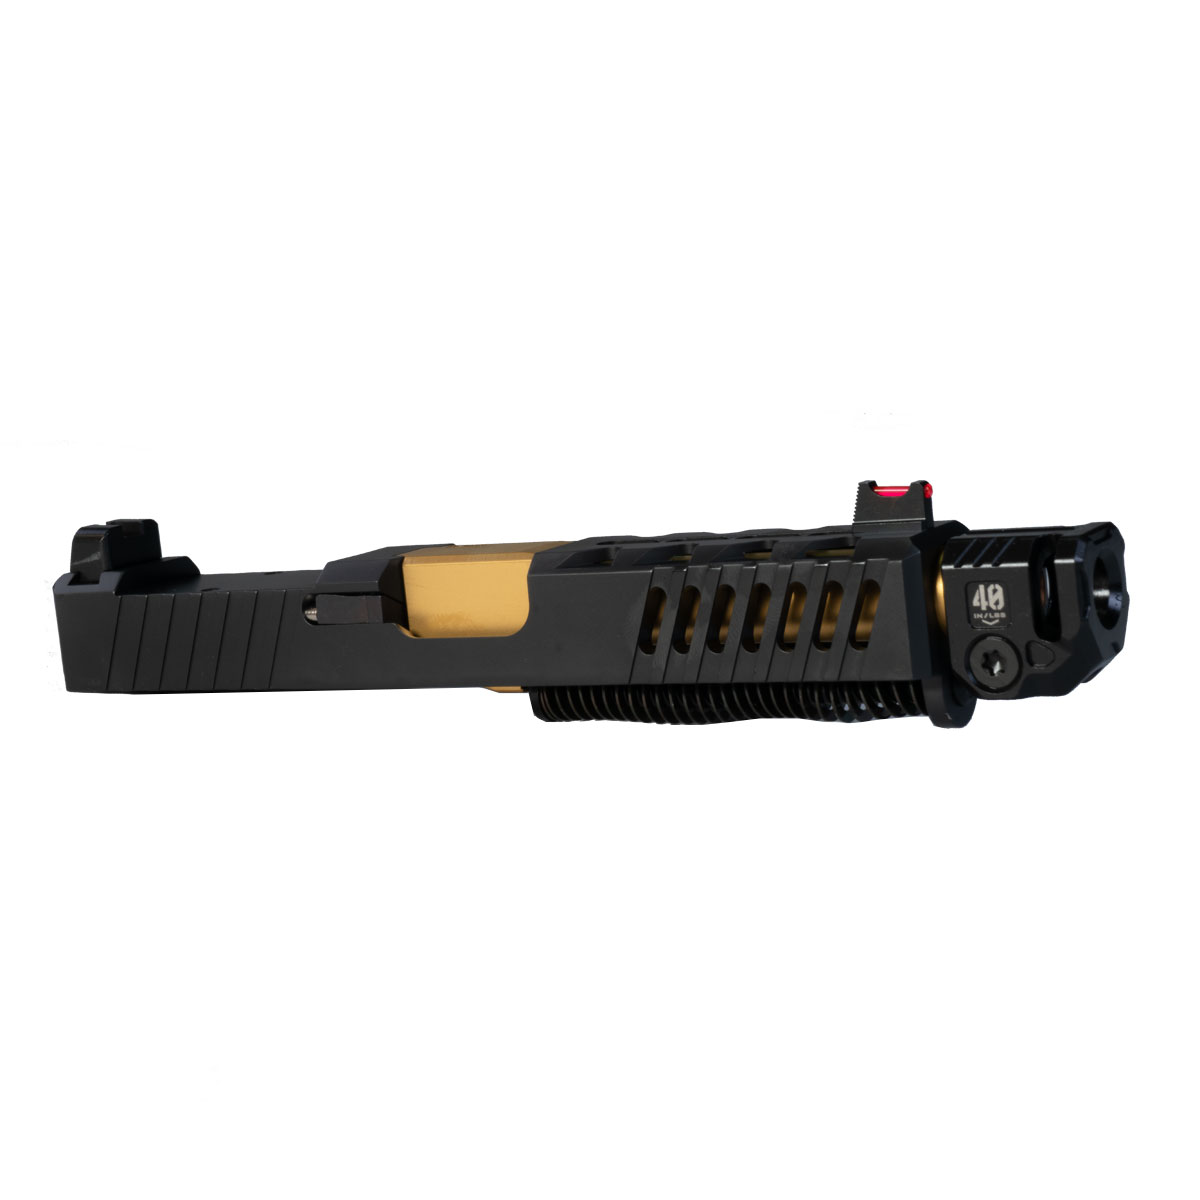 DD 'Obsidio w/ Strike Industries Compensator' 9mm Complete Slide Kit - Glock 19 Gen 1-3 Compatible